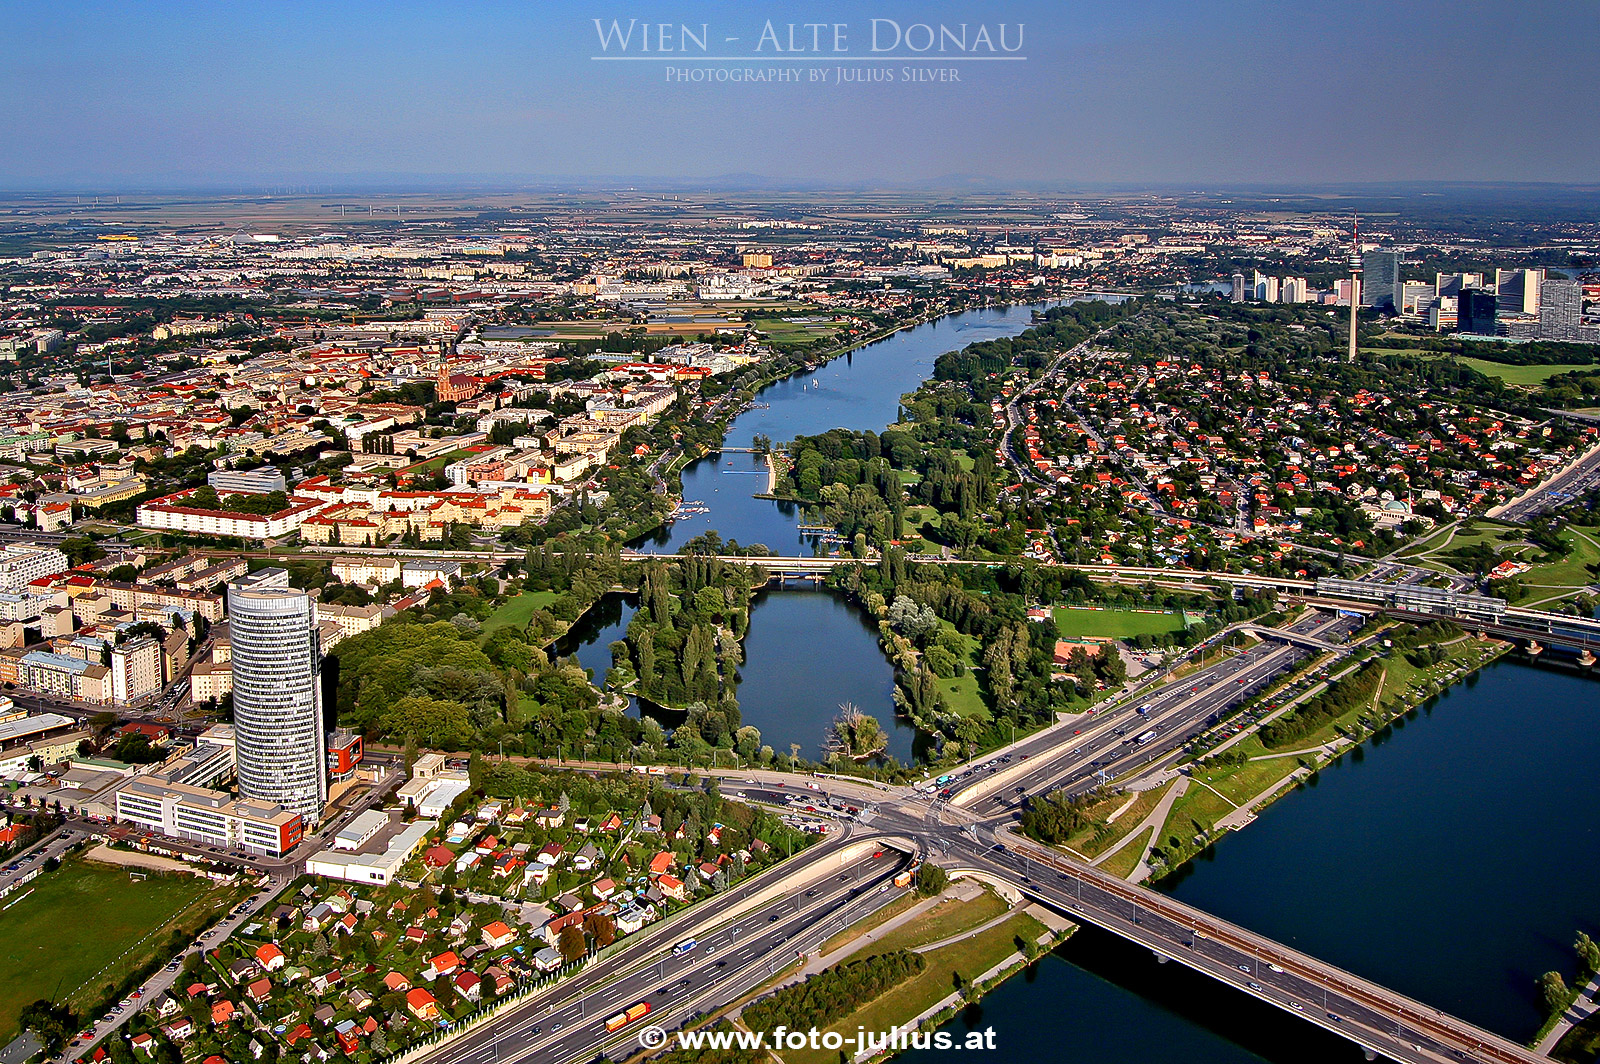 W3451a_Alte-Donau.jpg, 1021kB